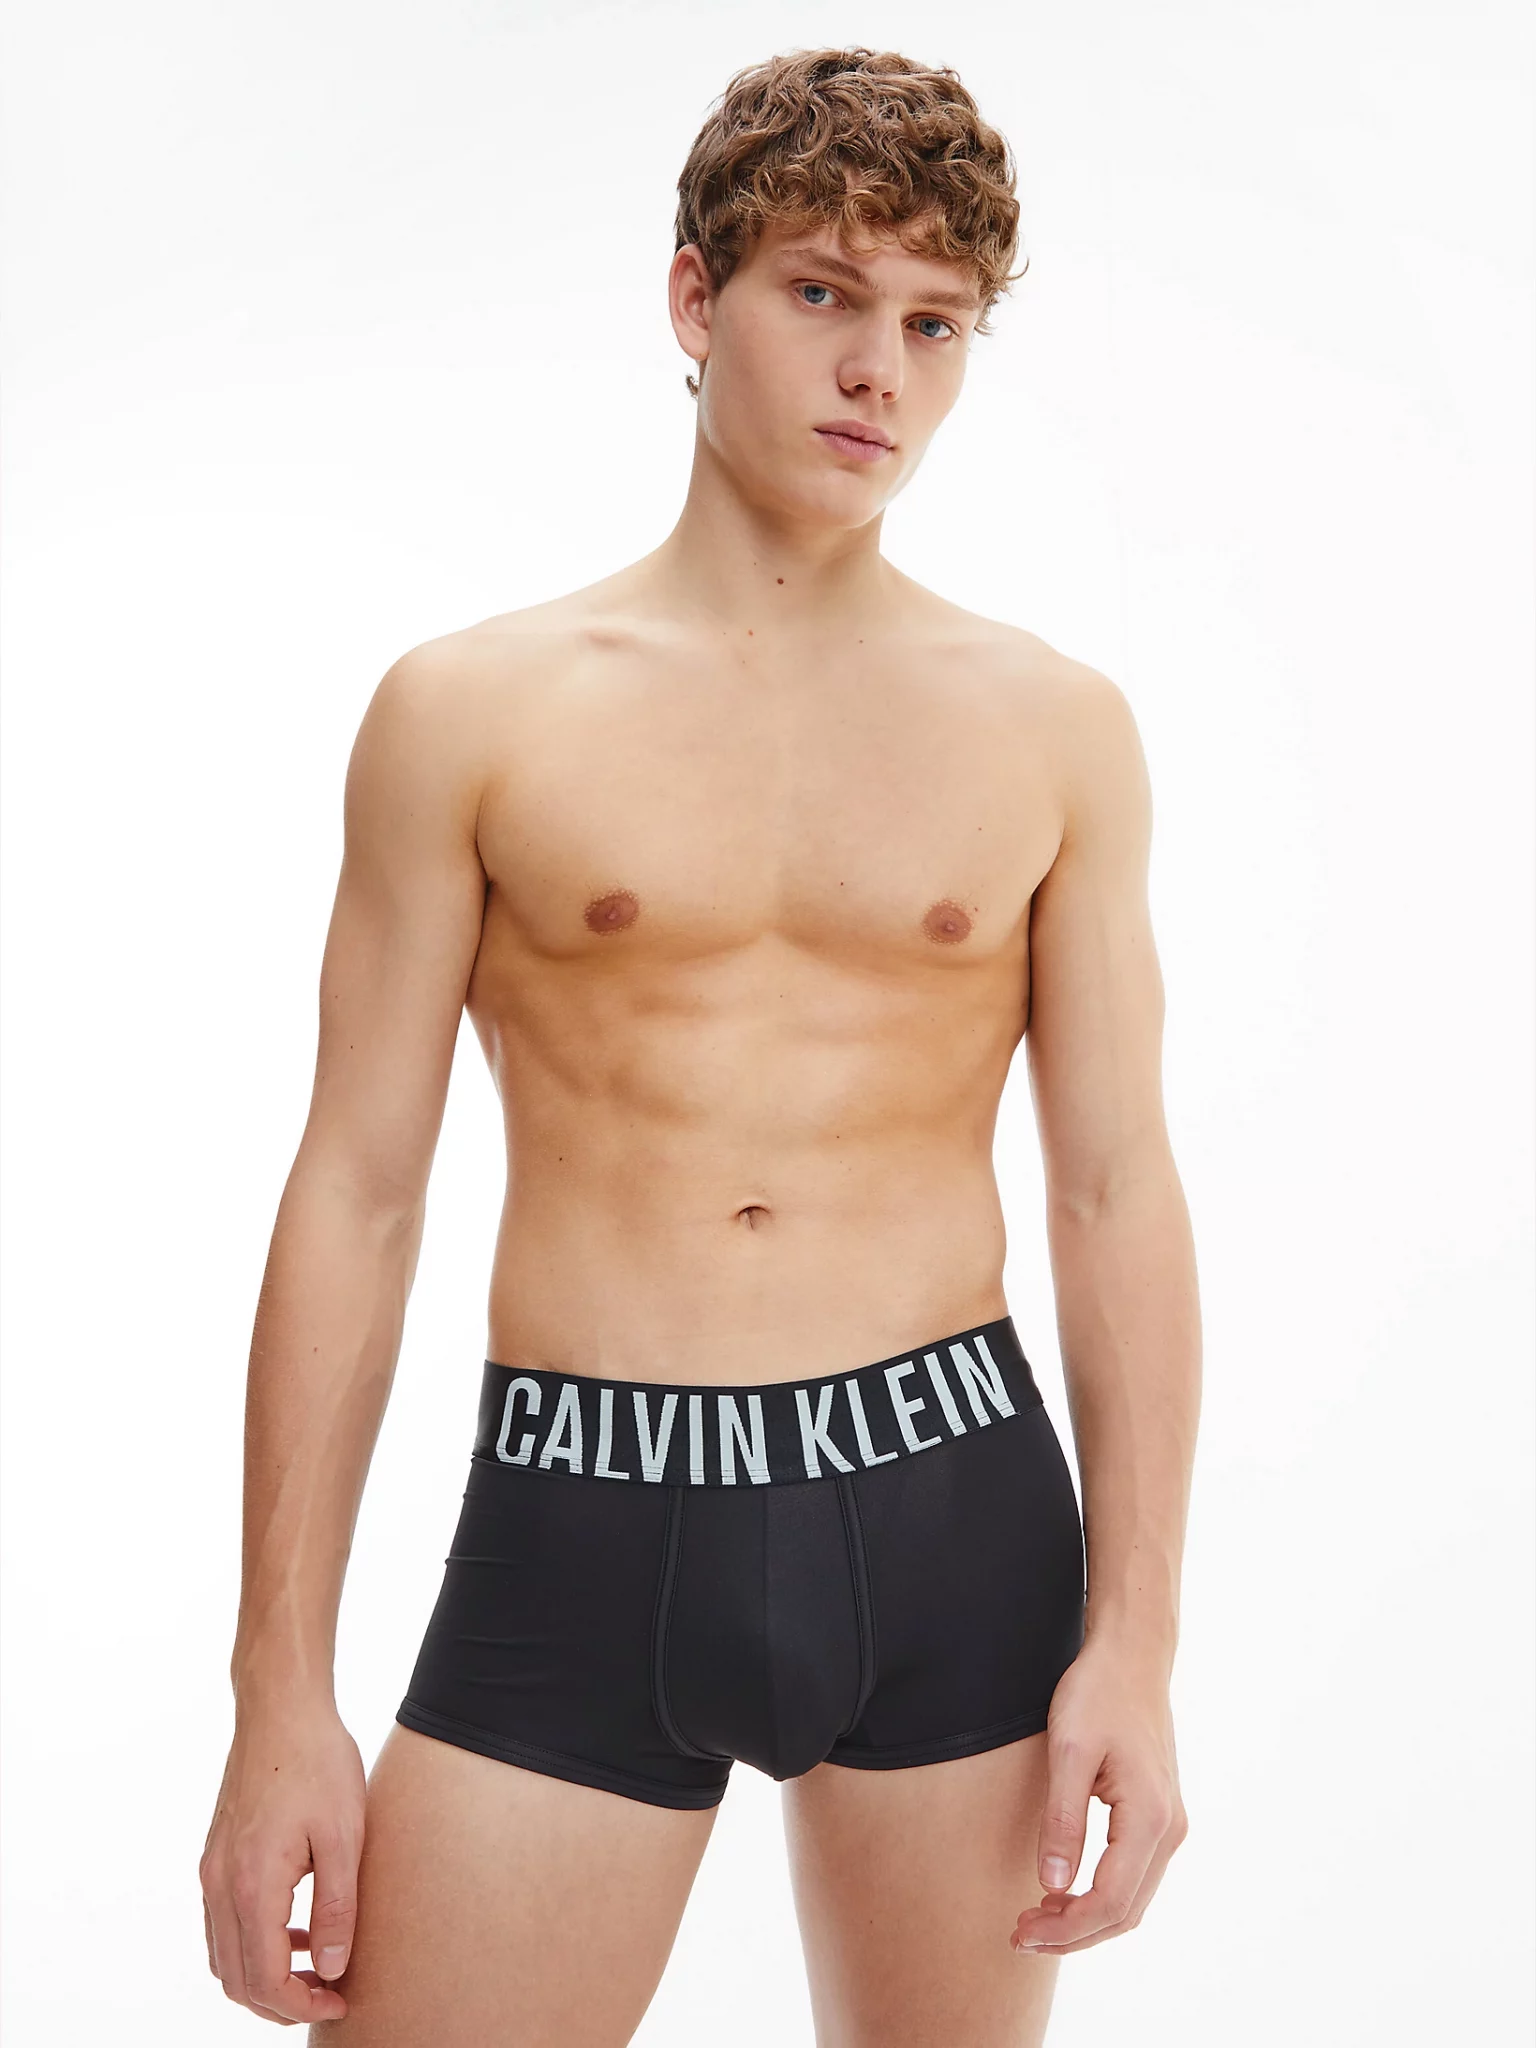 Buy Klein - Calvin Scandinavian Power Trunks Fashion Store 2-Pack Black Intense